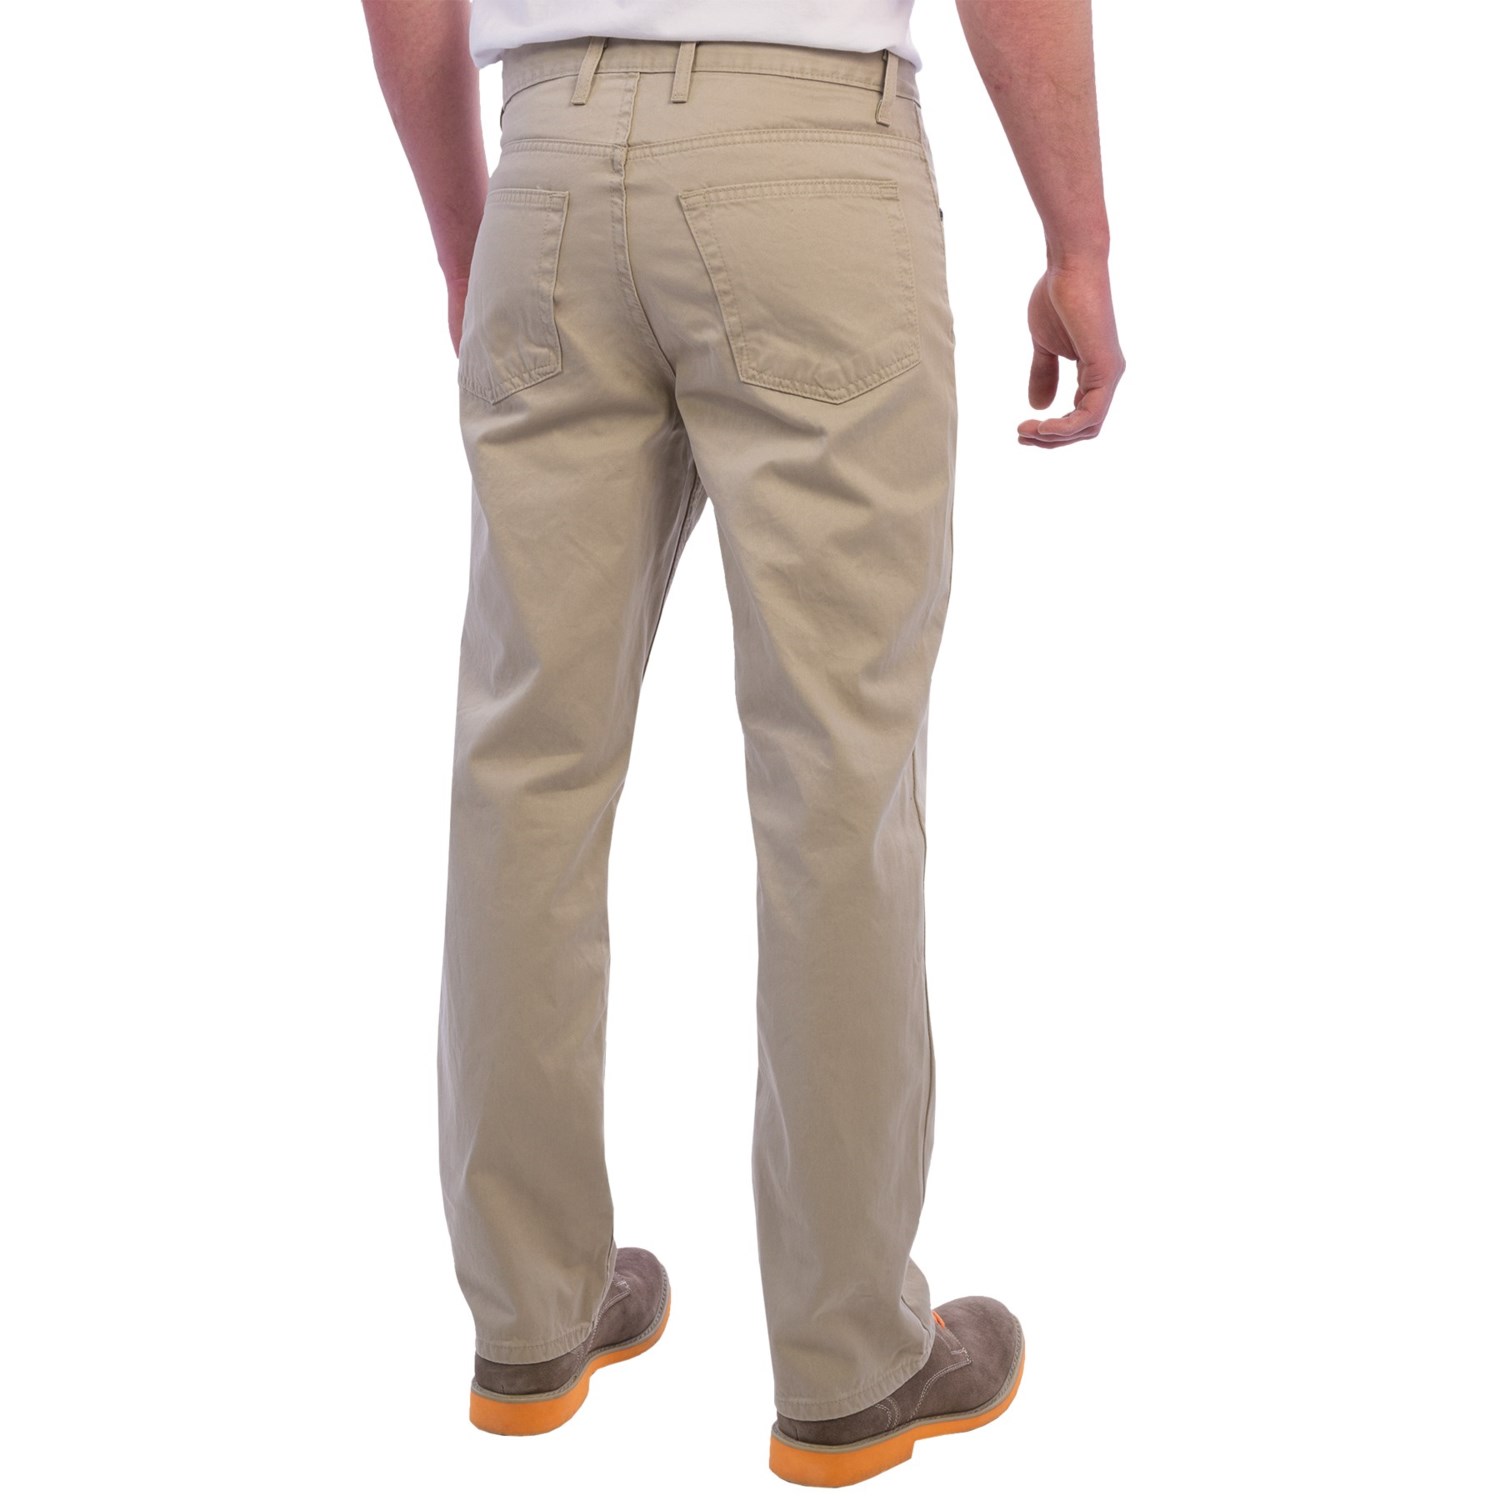 Cotton Twill 5-Pocket Pants (For Men) 9120P - Save 64%